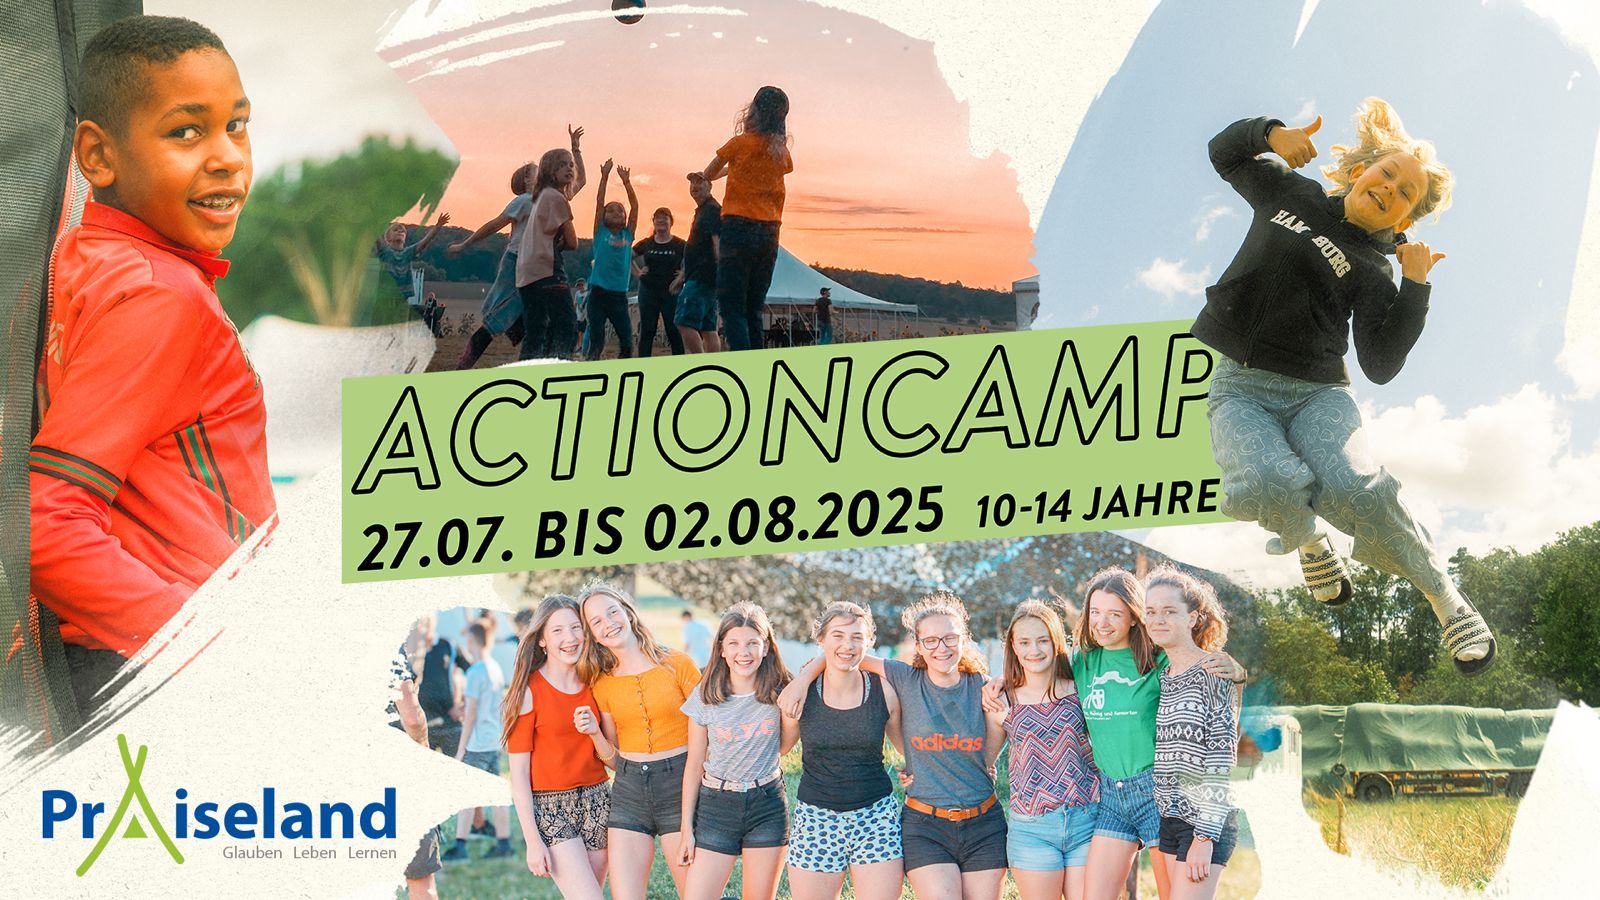 Actioncamp Praiseland 2025